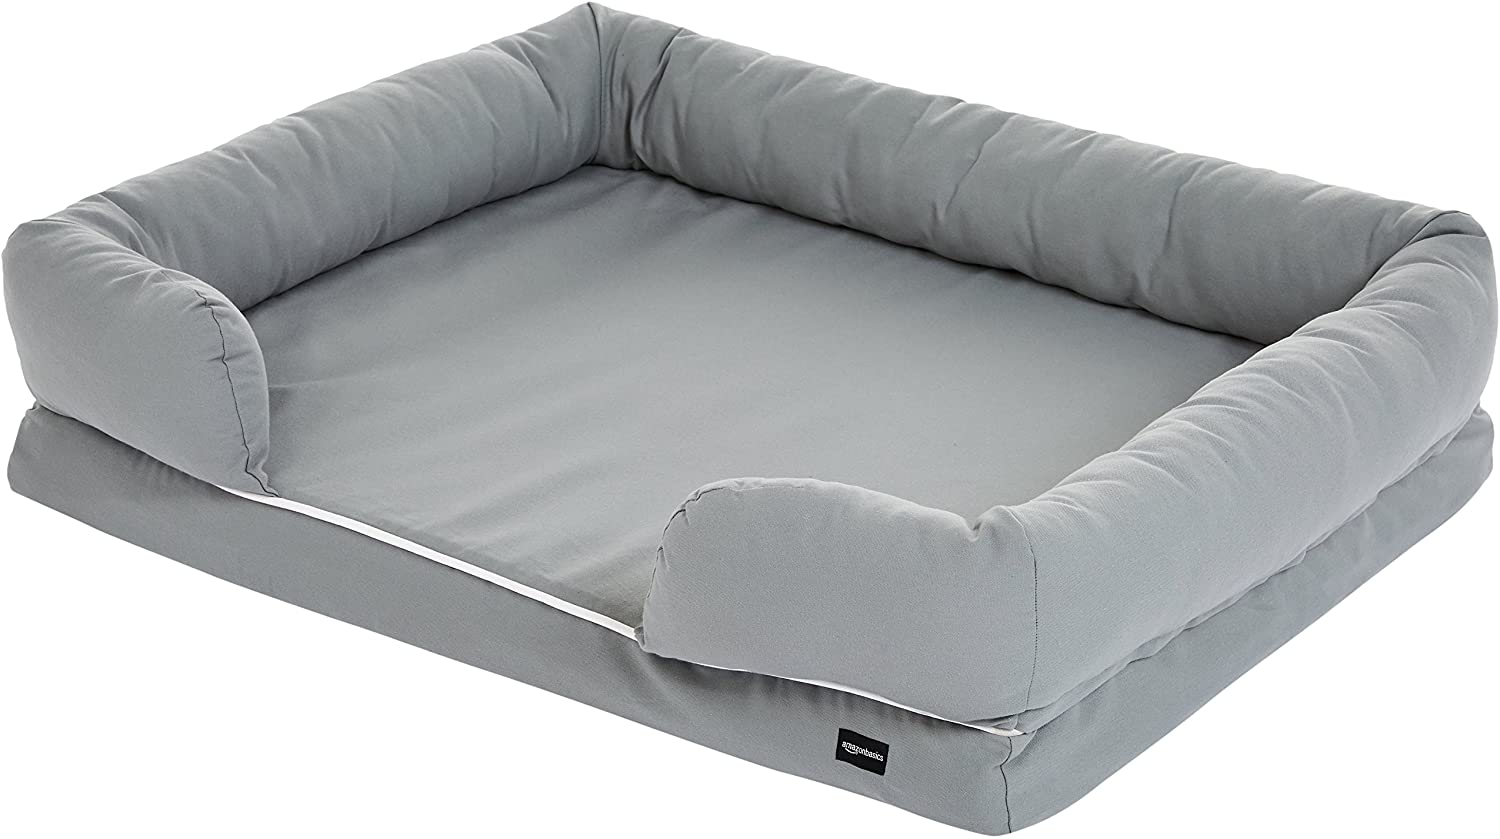  AmazonBasics - Sofá cama para mascotas, Grande 